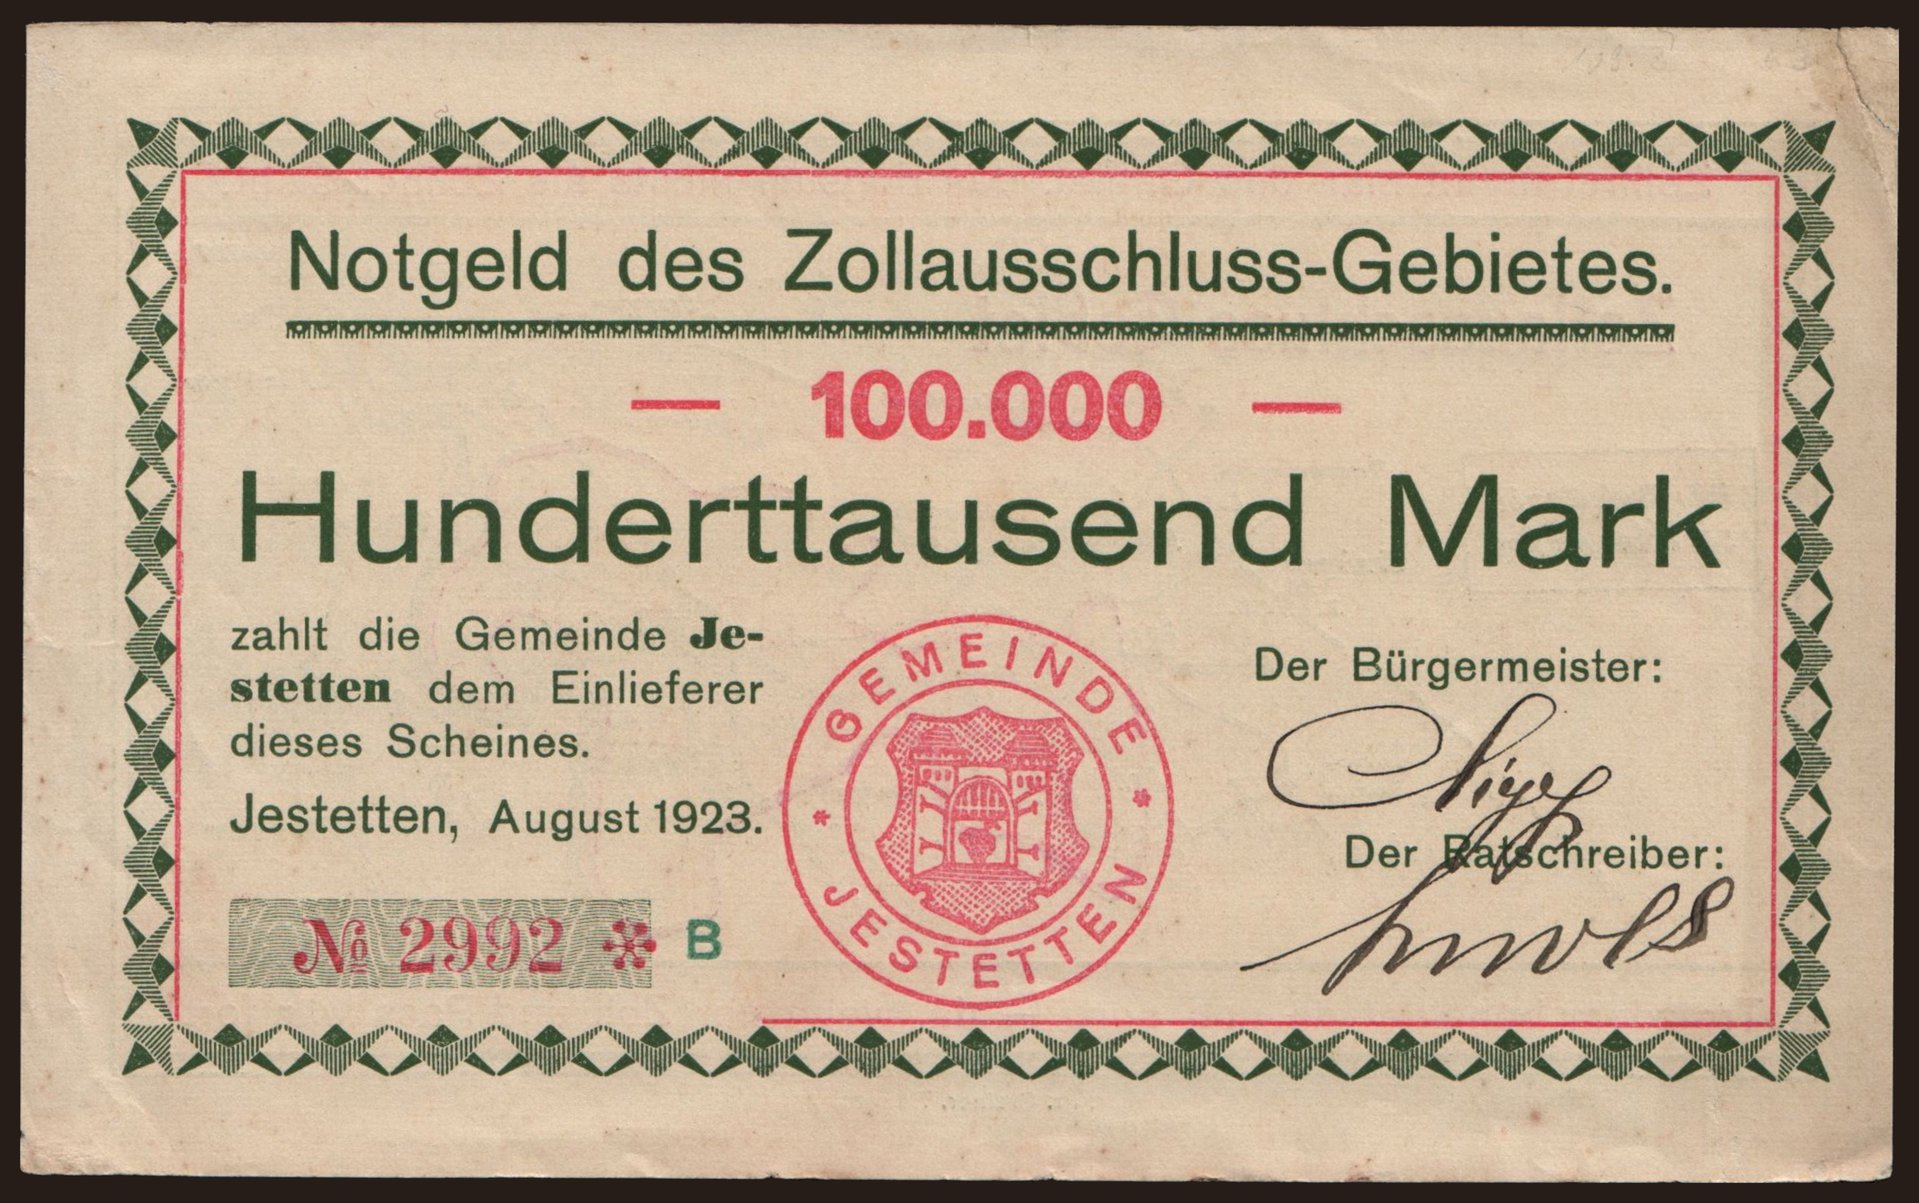 Jestetten/ Notgeld des Zollausschluss-Gebietes, 100.000 Mark, 1923